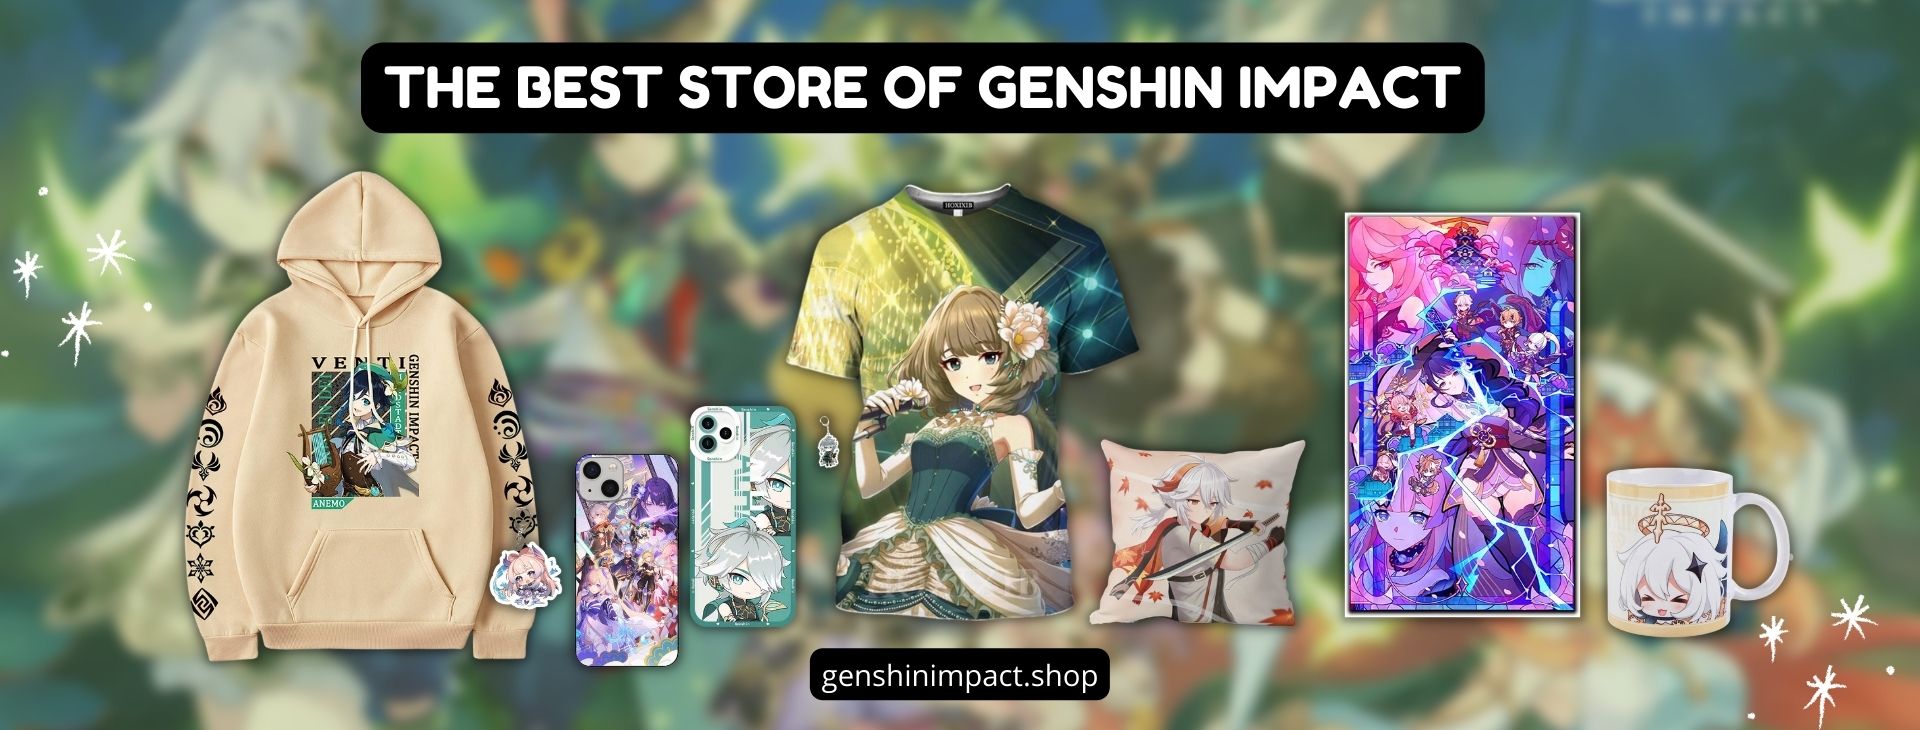 No edit genshin impact Banner - Genshin Impact Shop